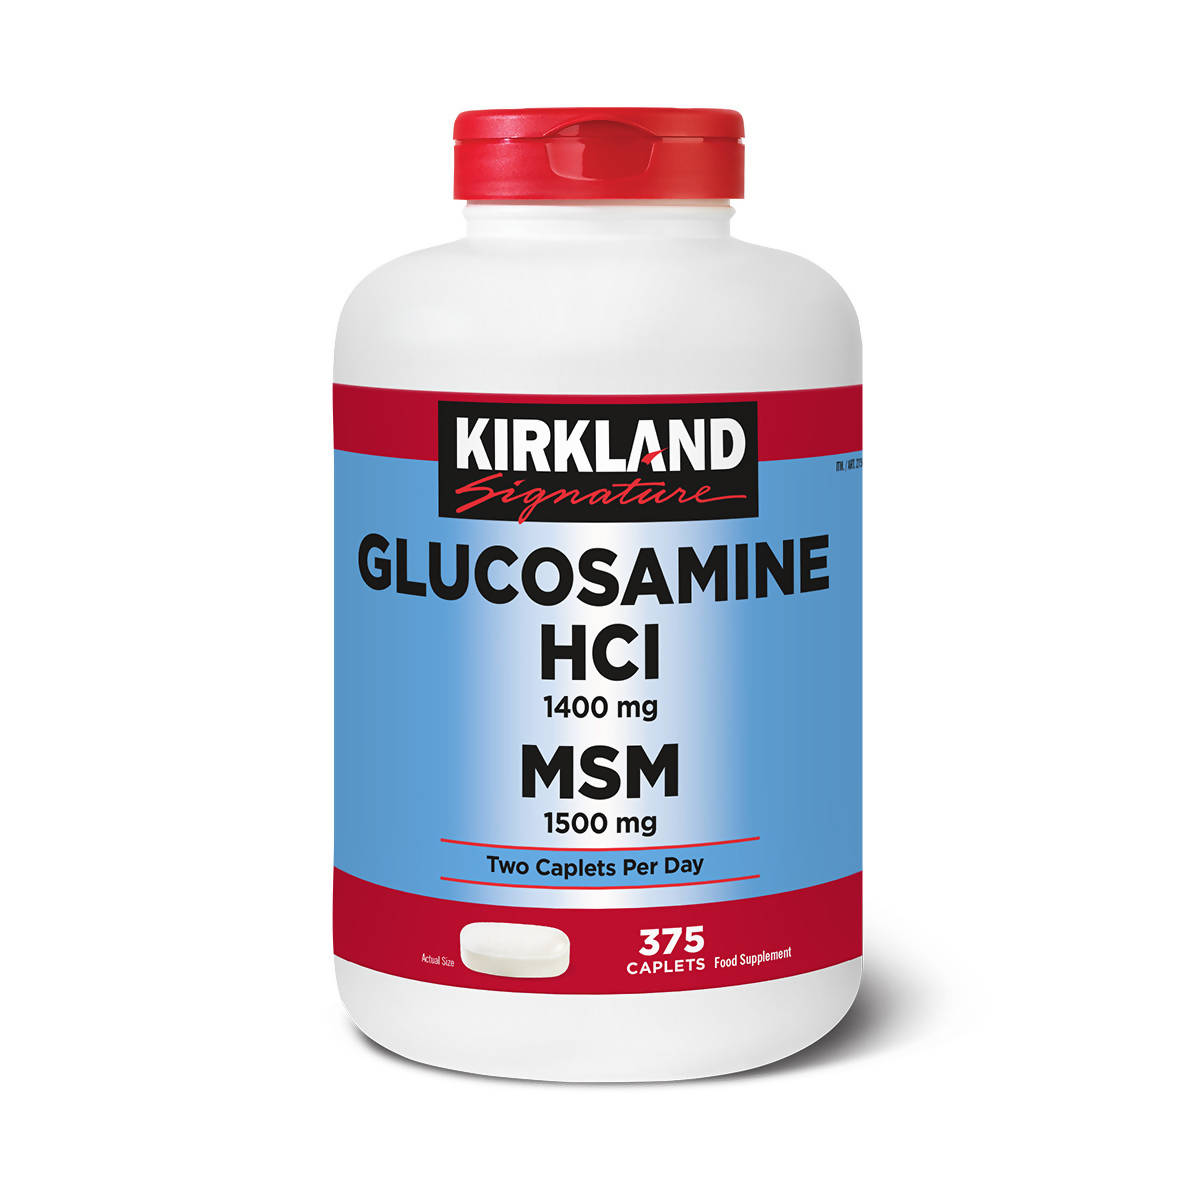 Kirkland Signature Glucosamine HCI & MSM, 375ct Vitamins Costco UK   